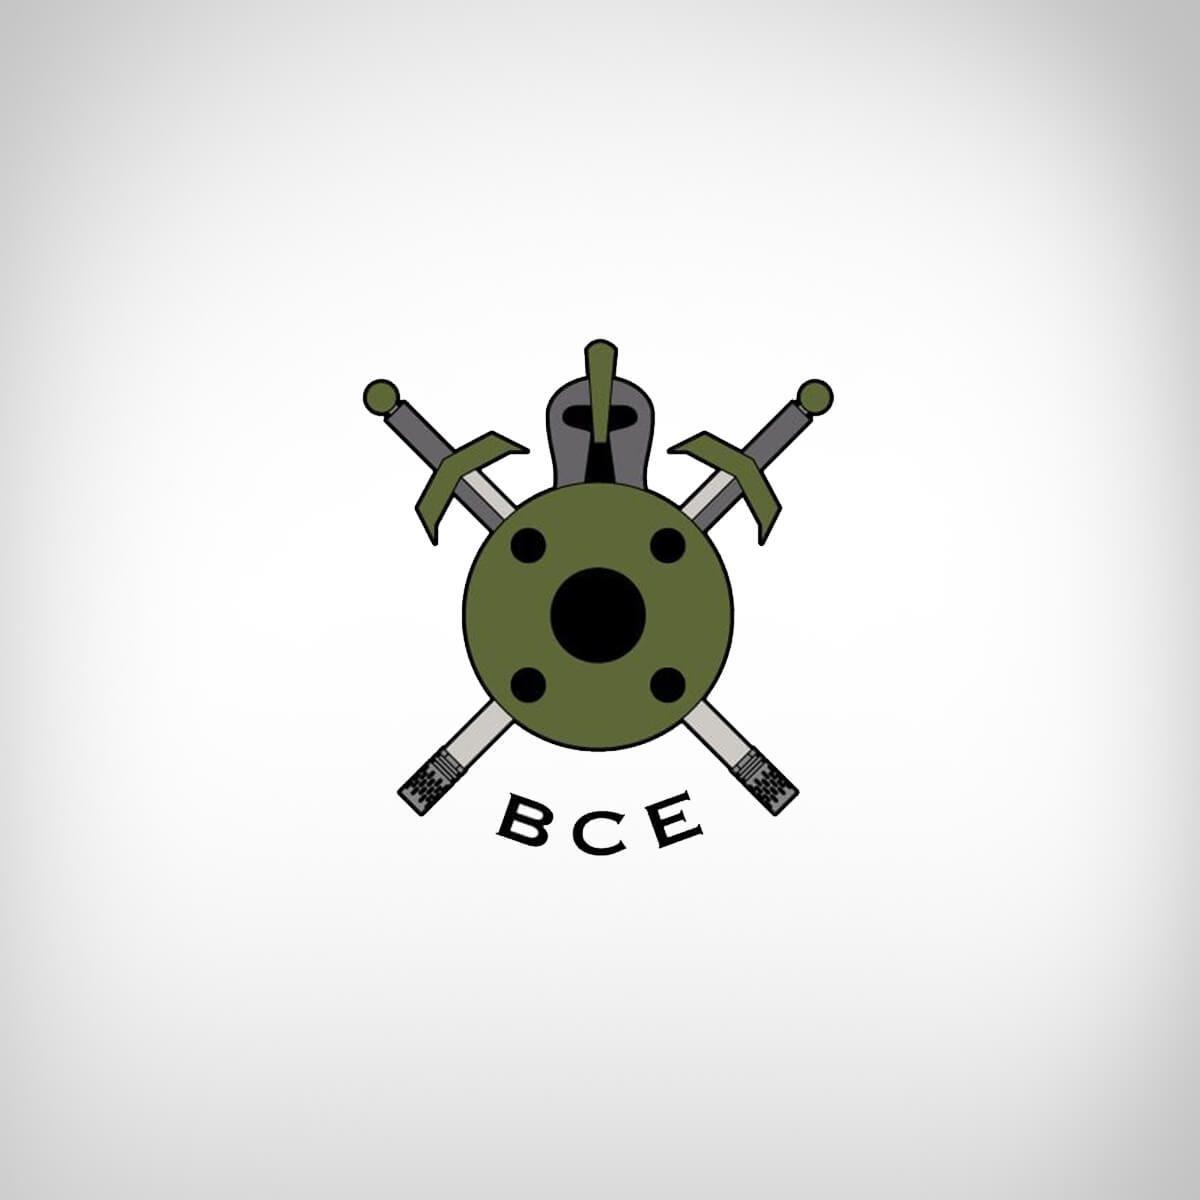 BattleComp Logo - Manufacturer: Battle Comp Enterprises